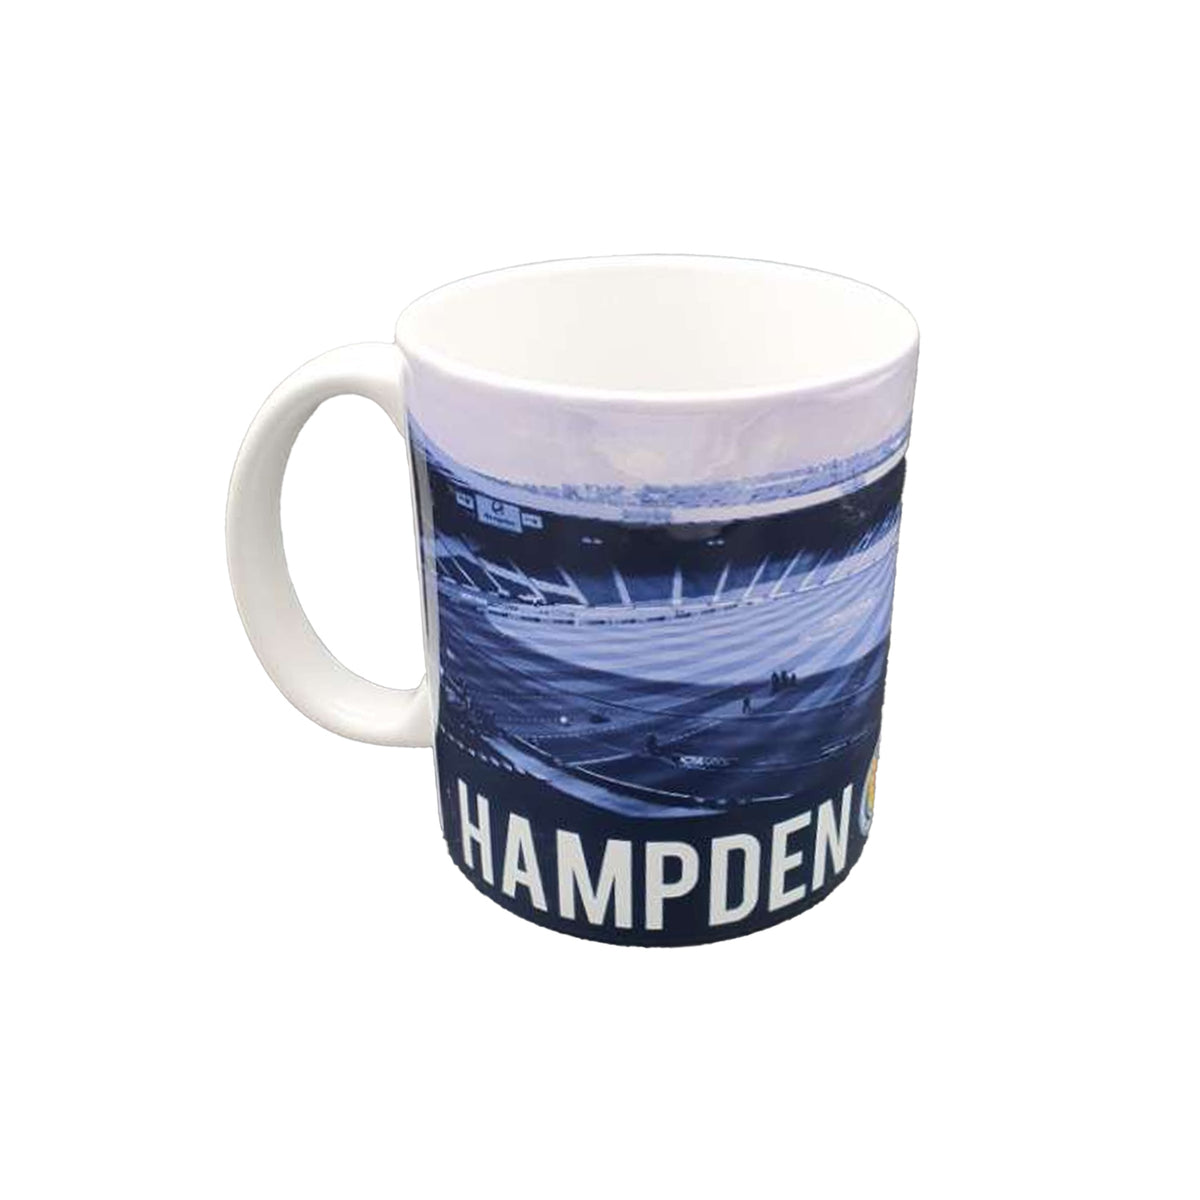 Scotland FA Hampden Stadium Mug